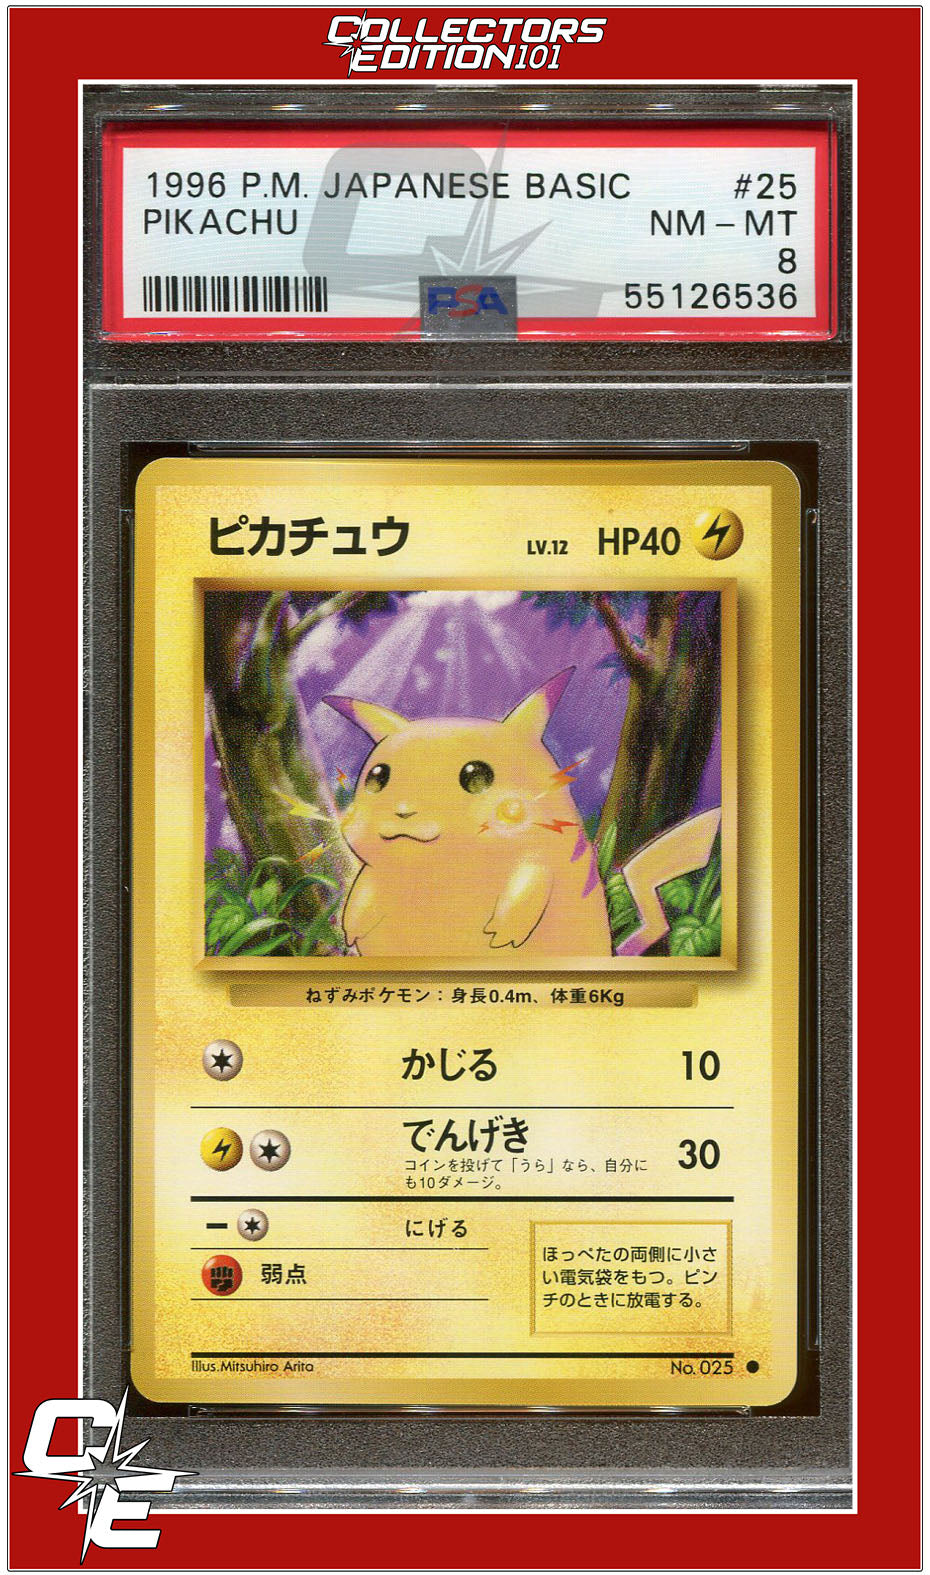 Japanese Basic 25 Pikachu PSA 8 | Collectors Edition 101